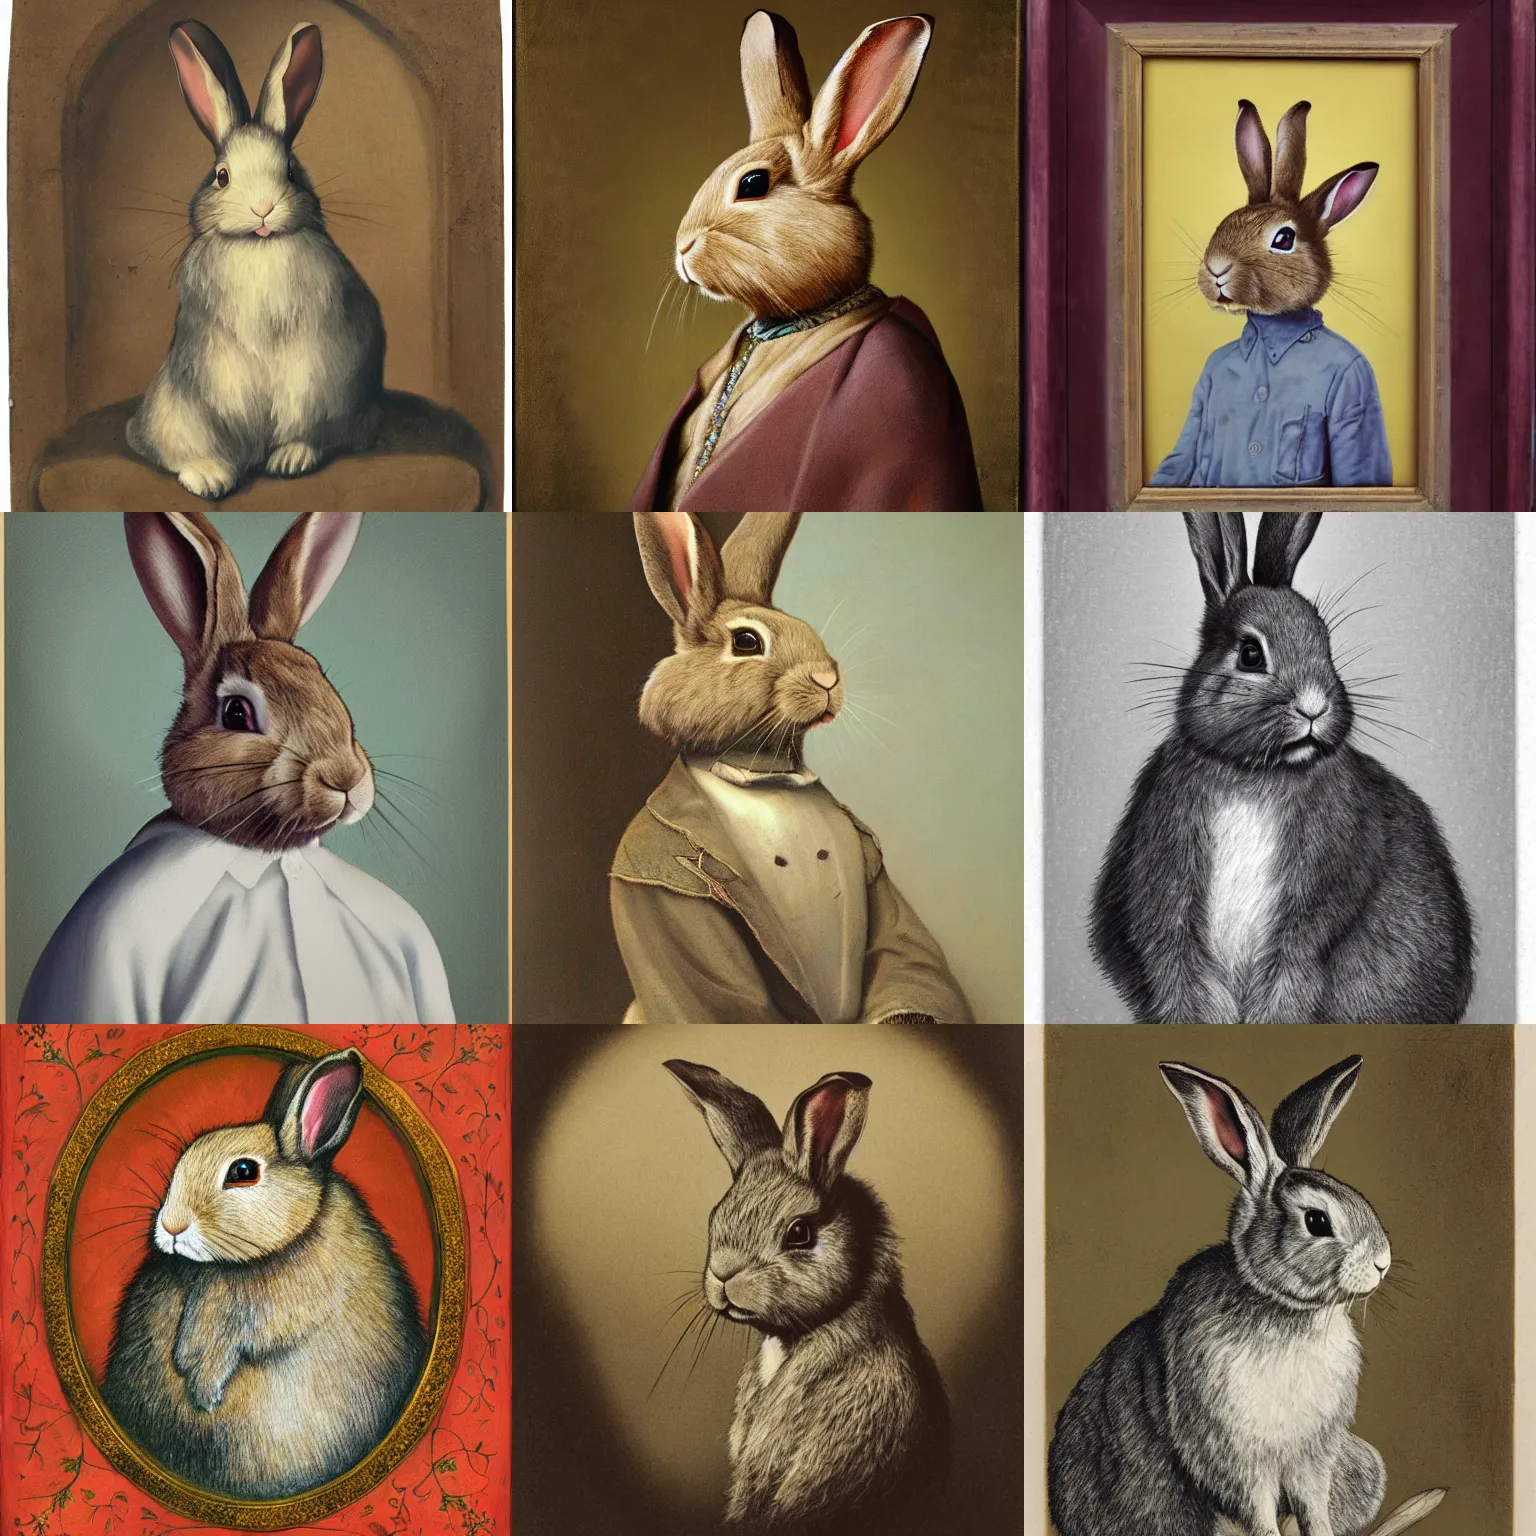 Prompt: portrait of a rabbit king